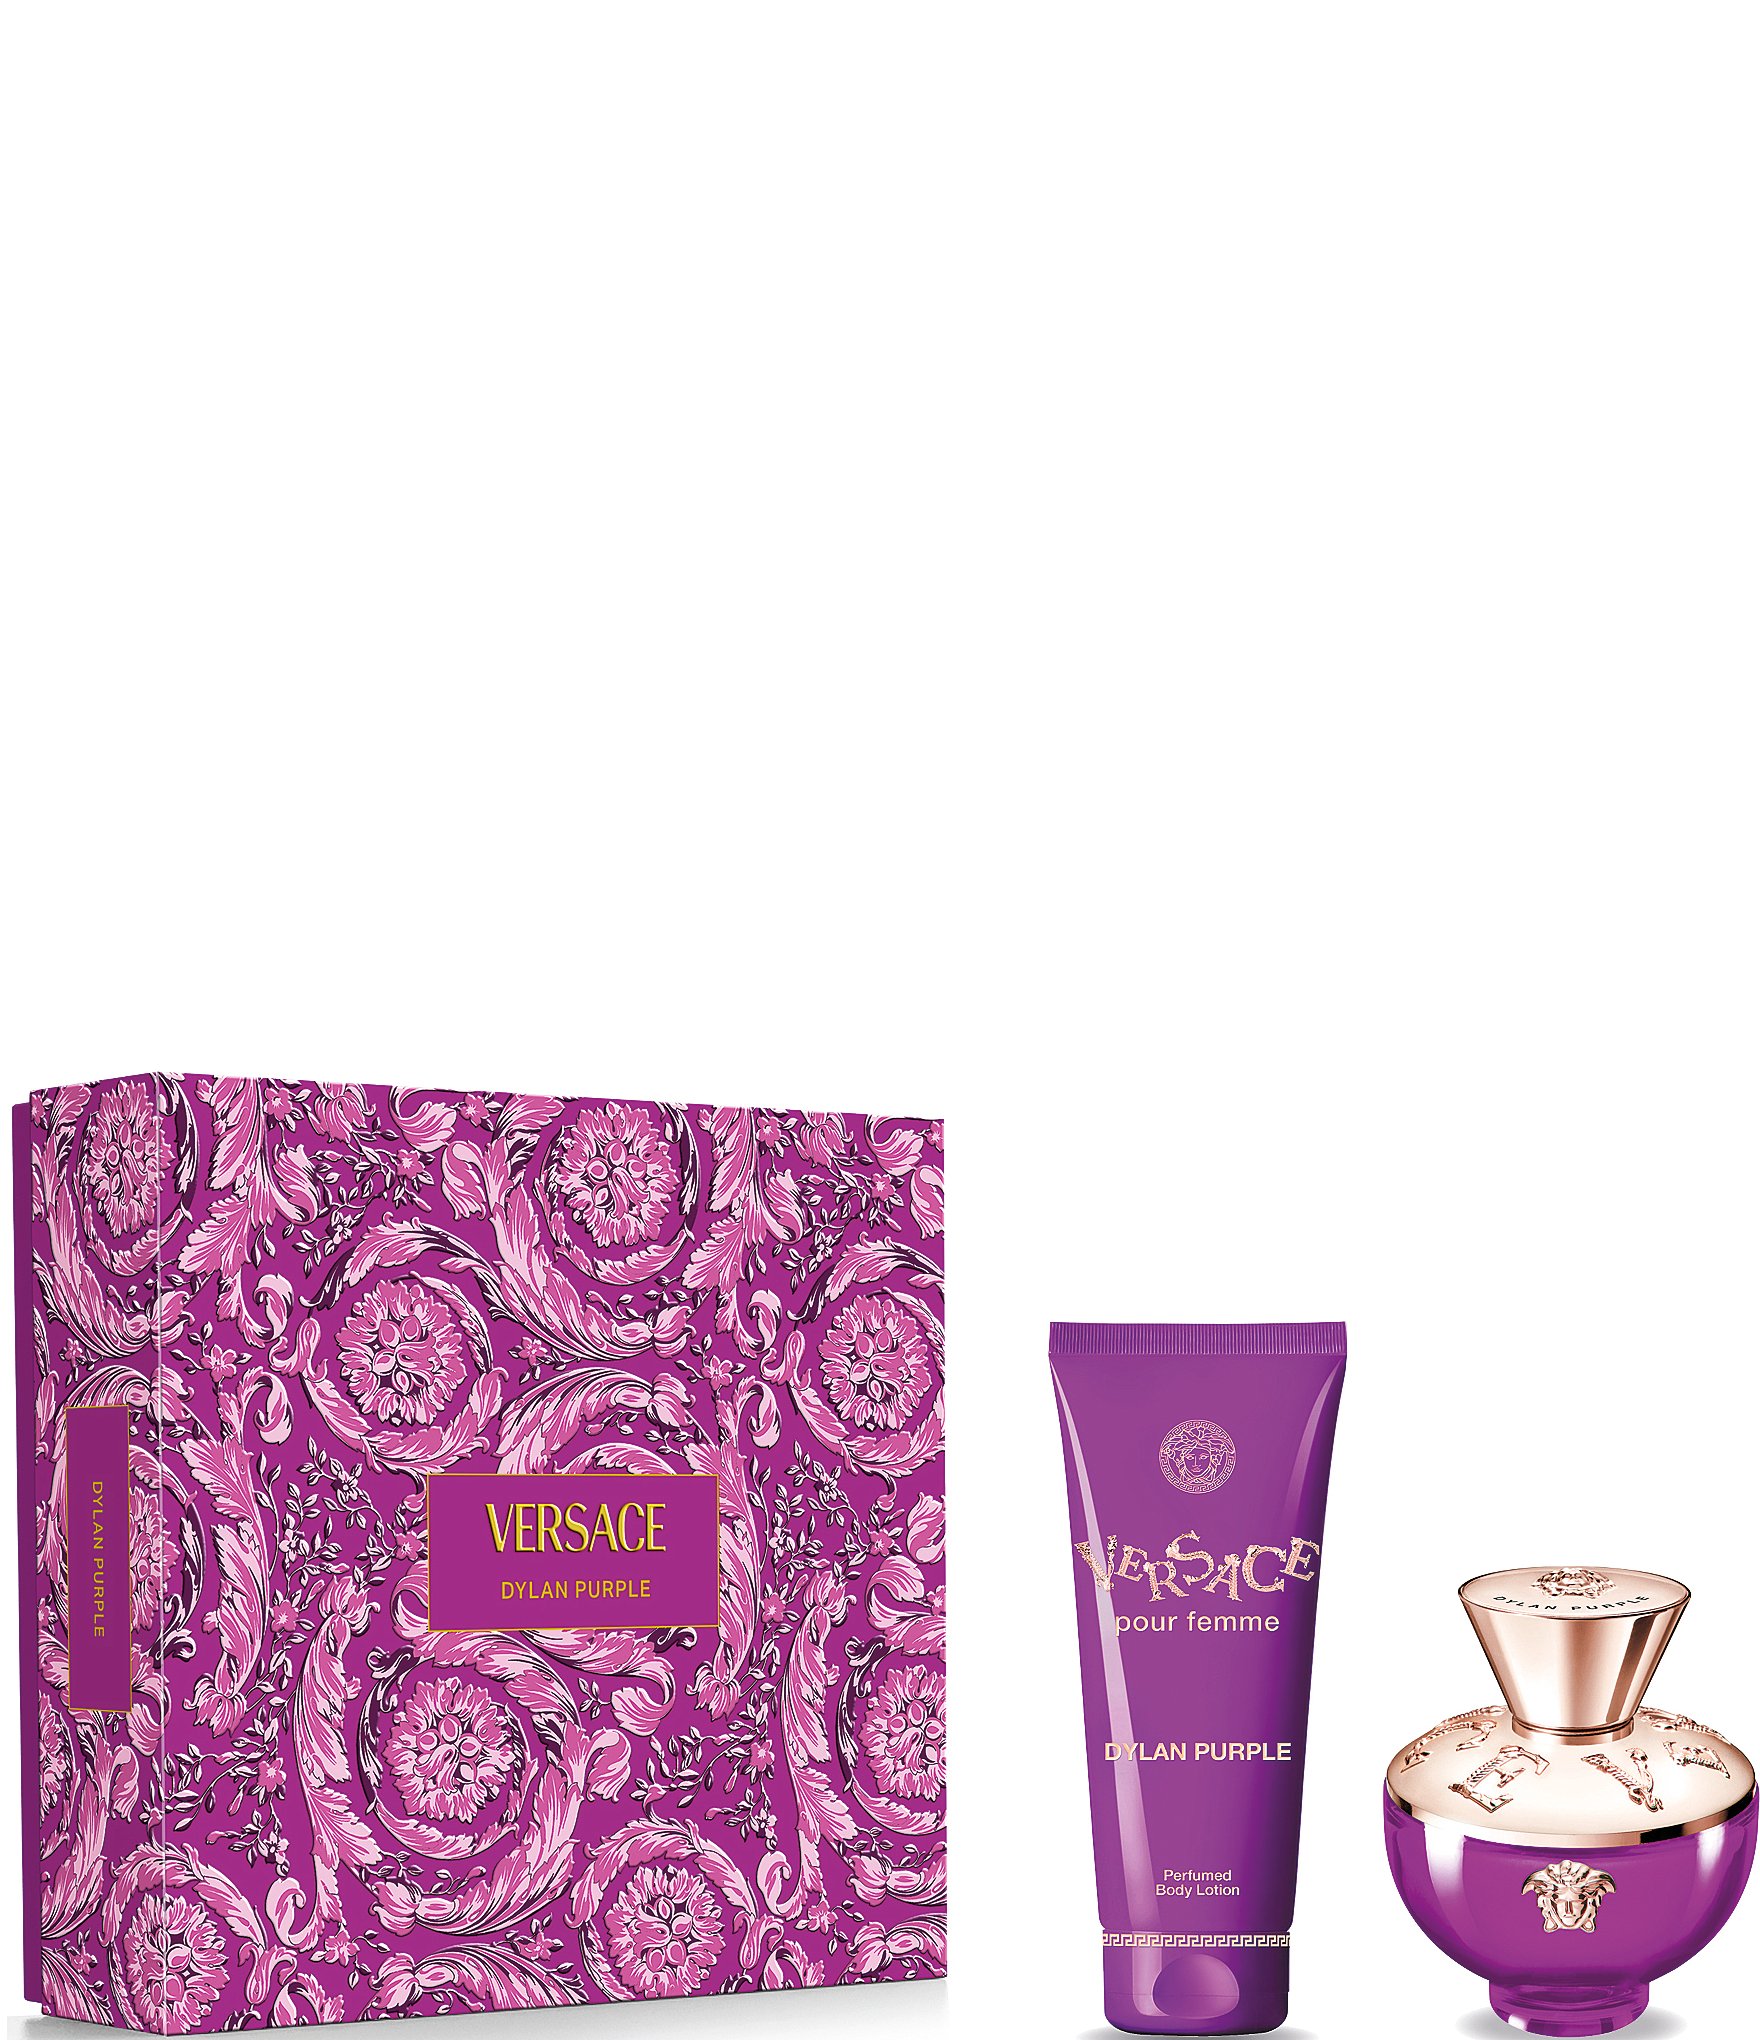 Versace Dylan Purple Eau de Parfum Gift Set | Dillard's